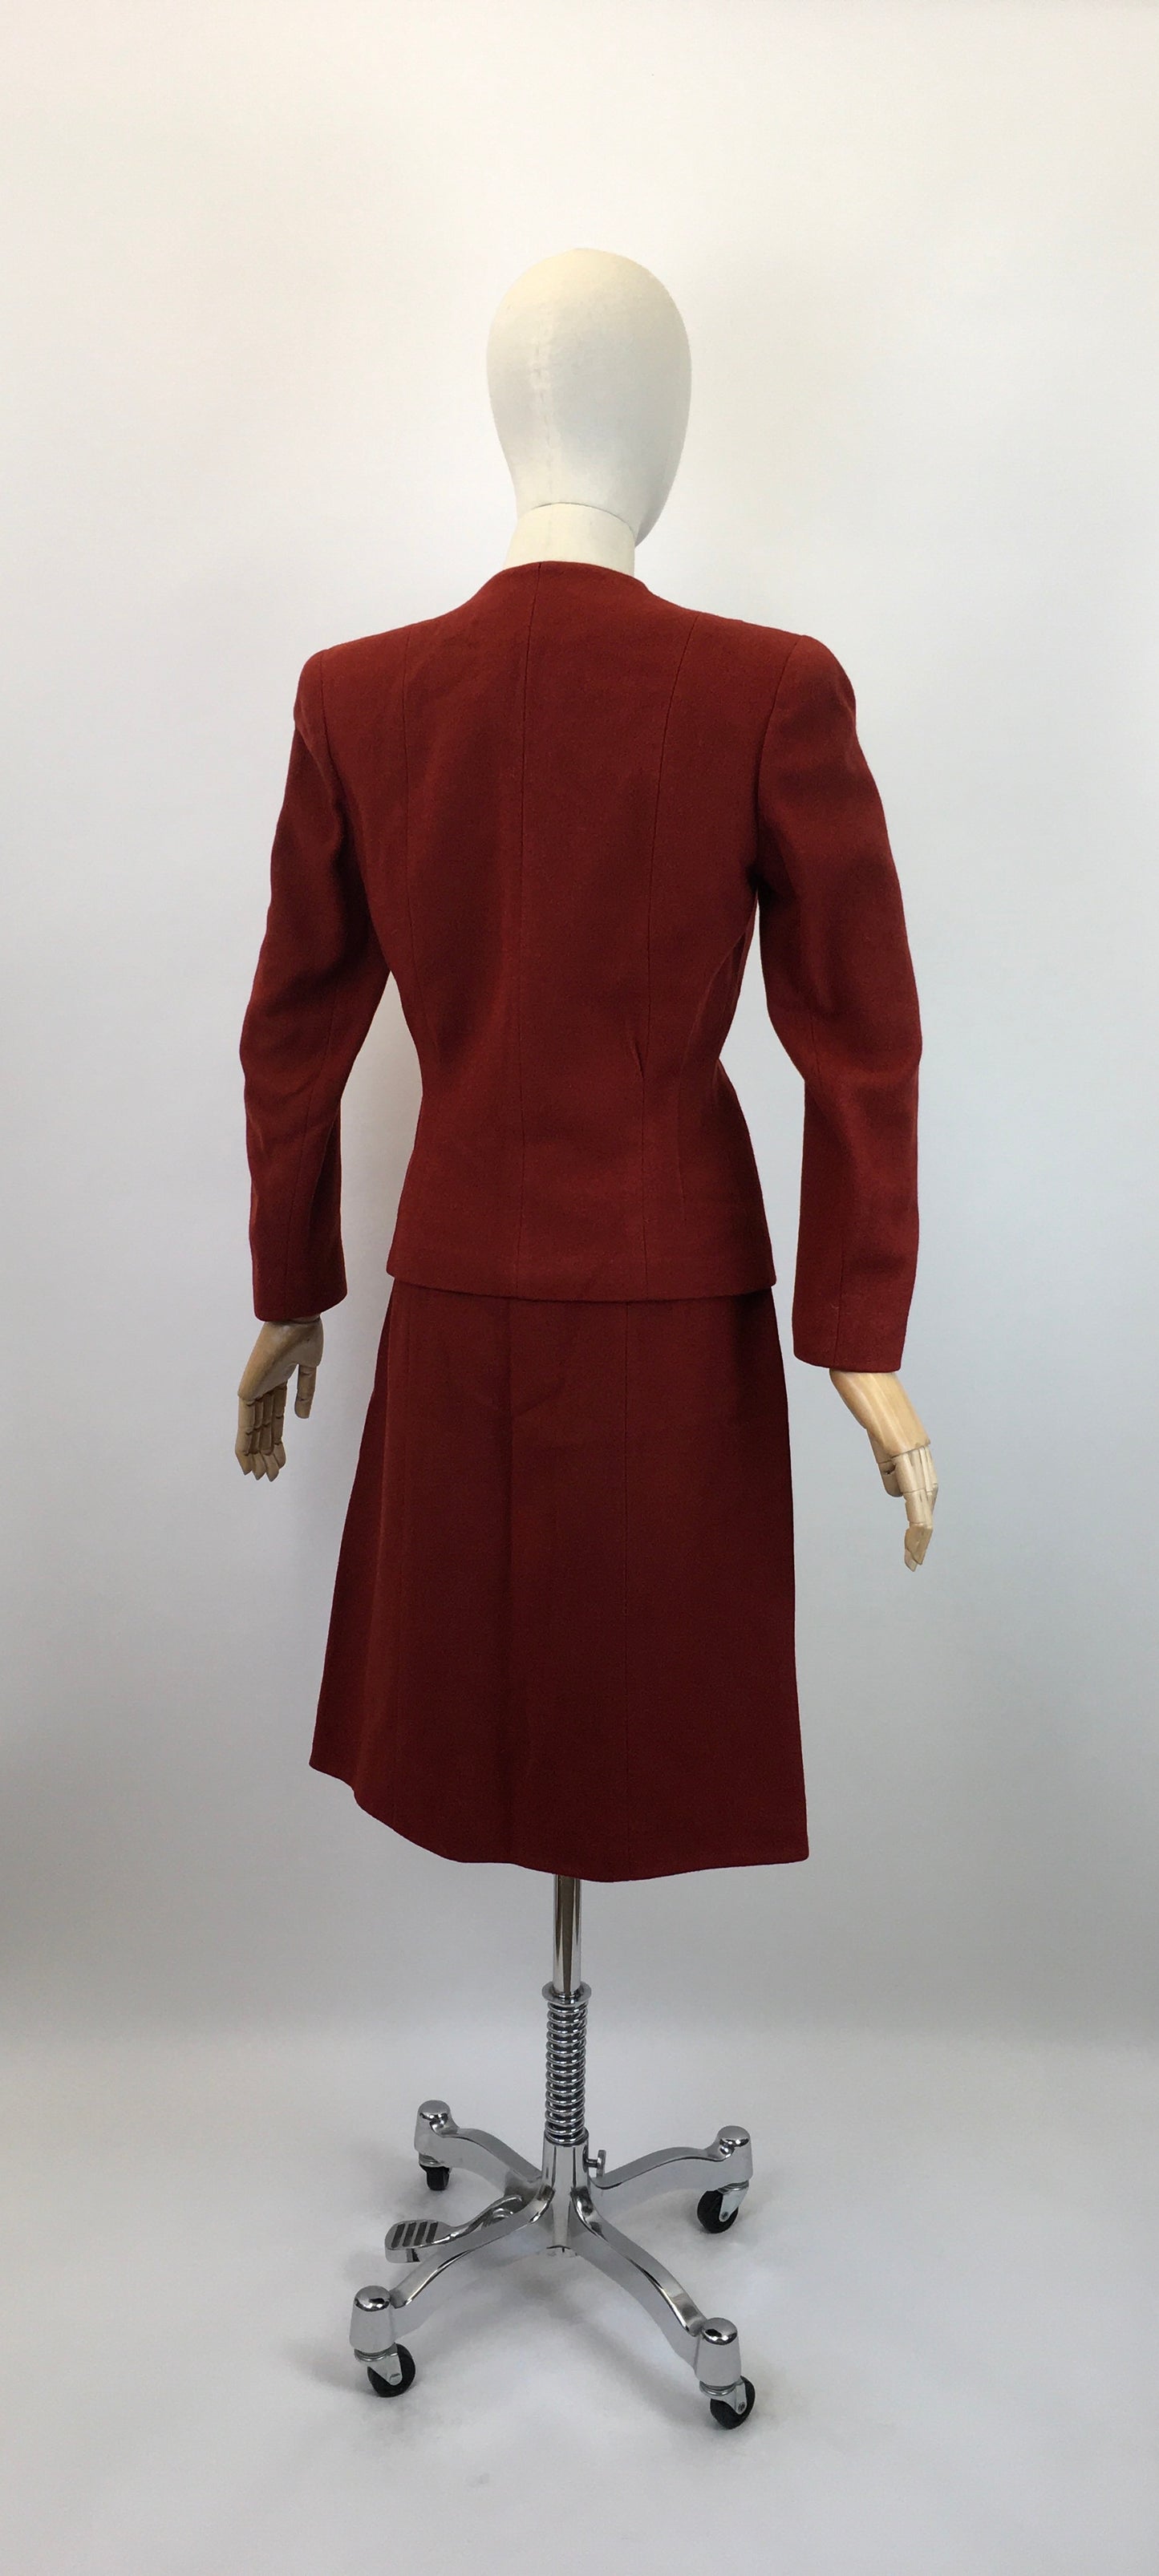 Original 1940's Sensational American Wool 2pc Suit - In A Warm Rust